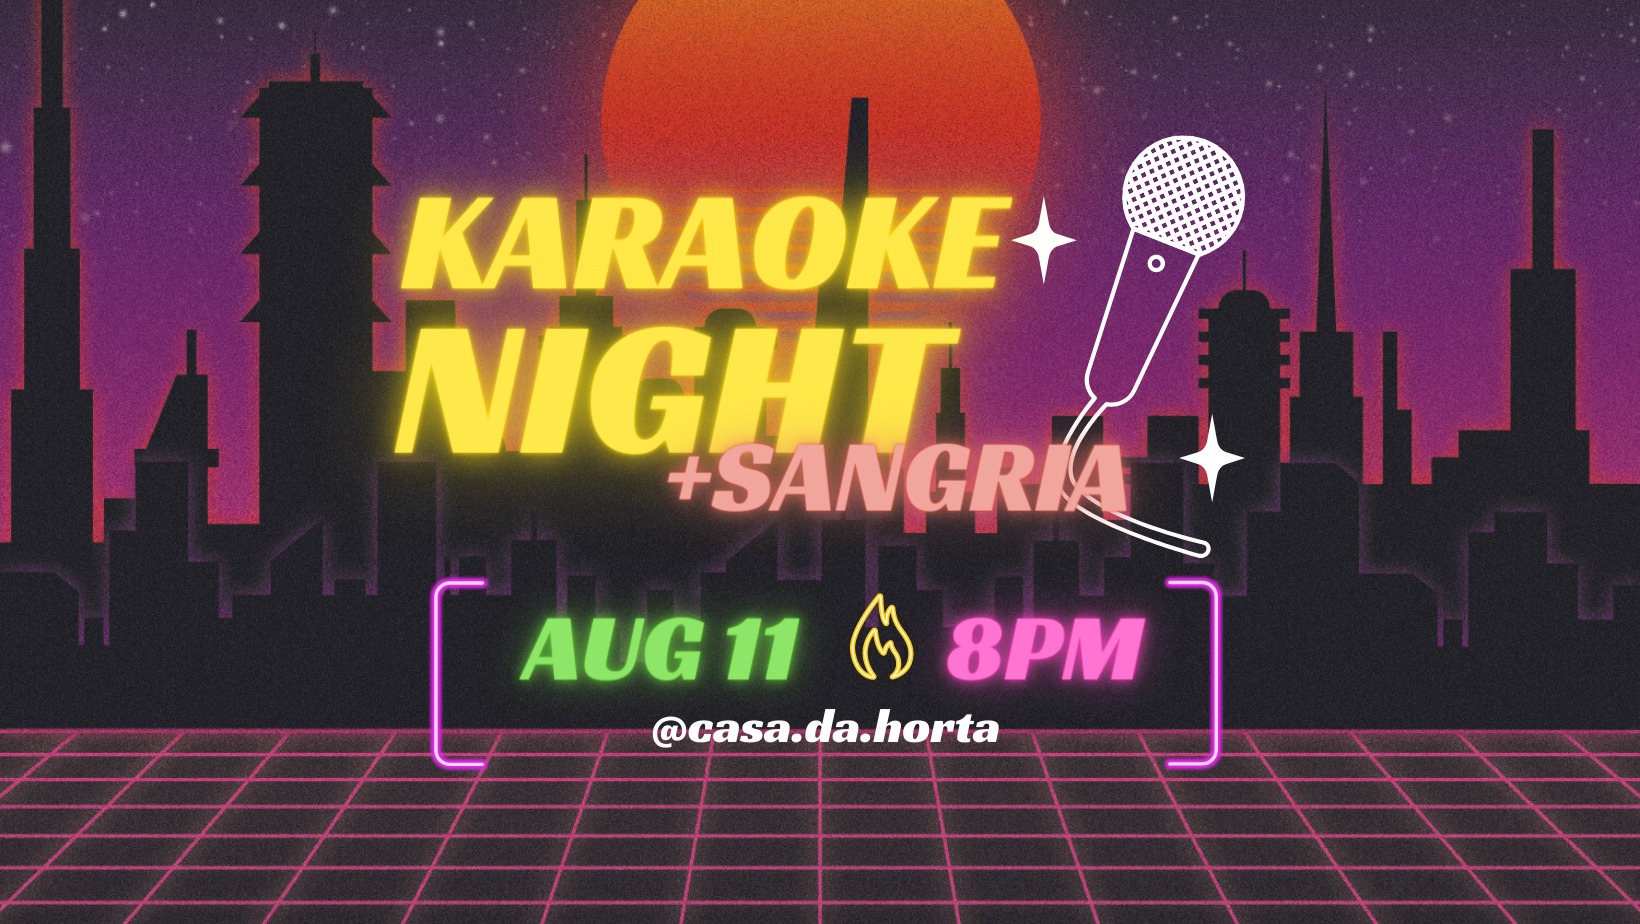 Noite de Sangria e Karaoke || Karaoke and Sangria Night